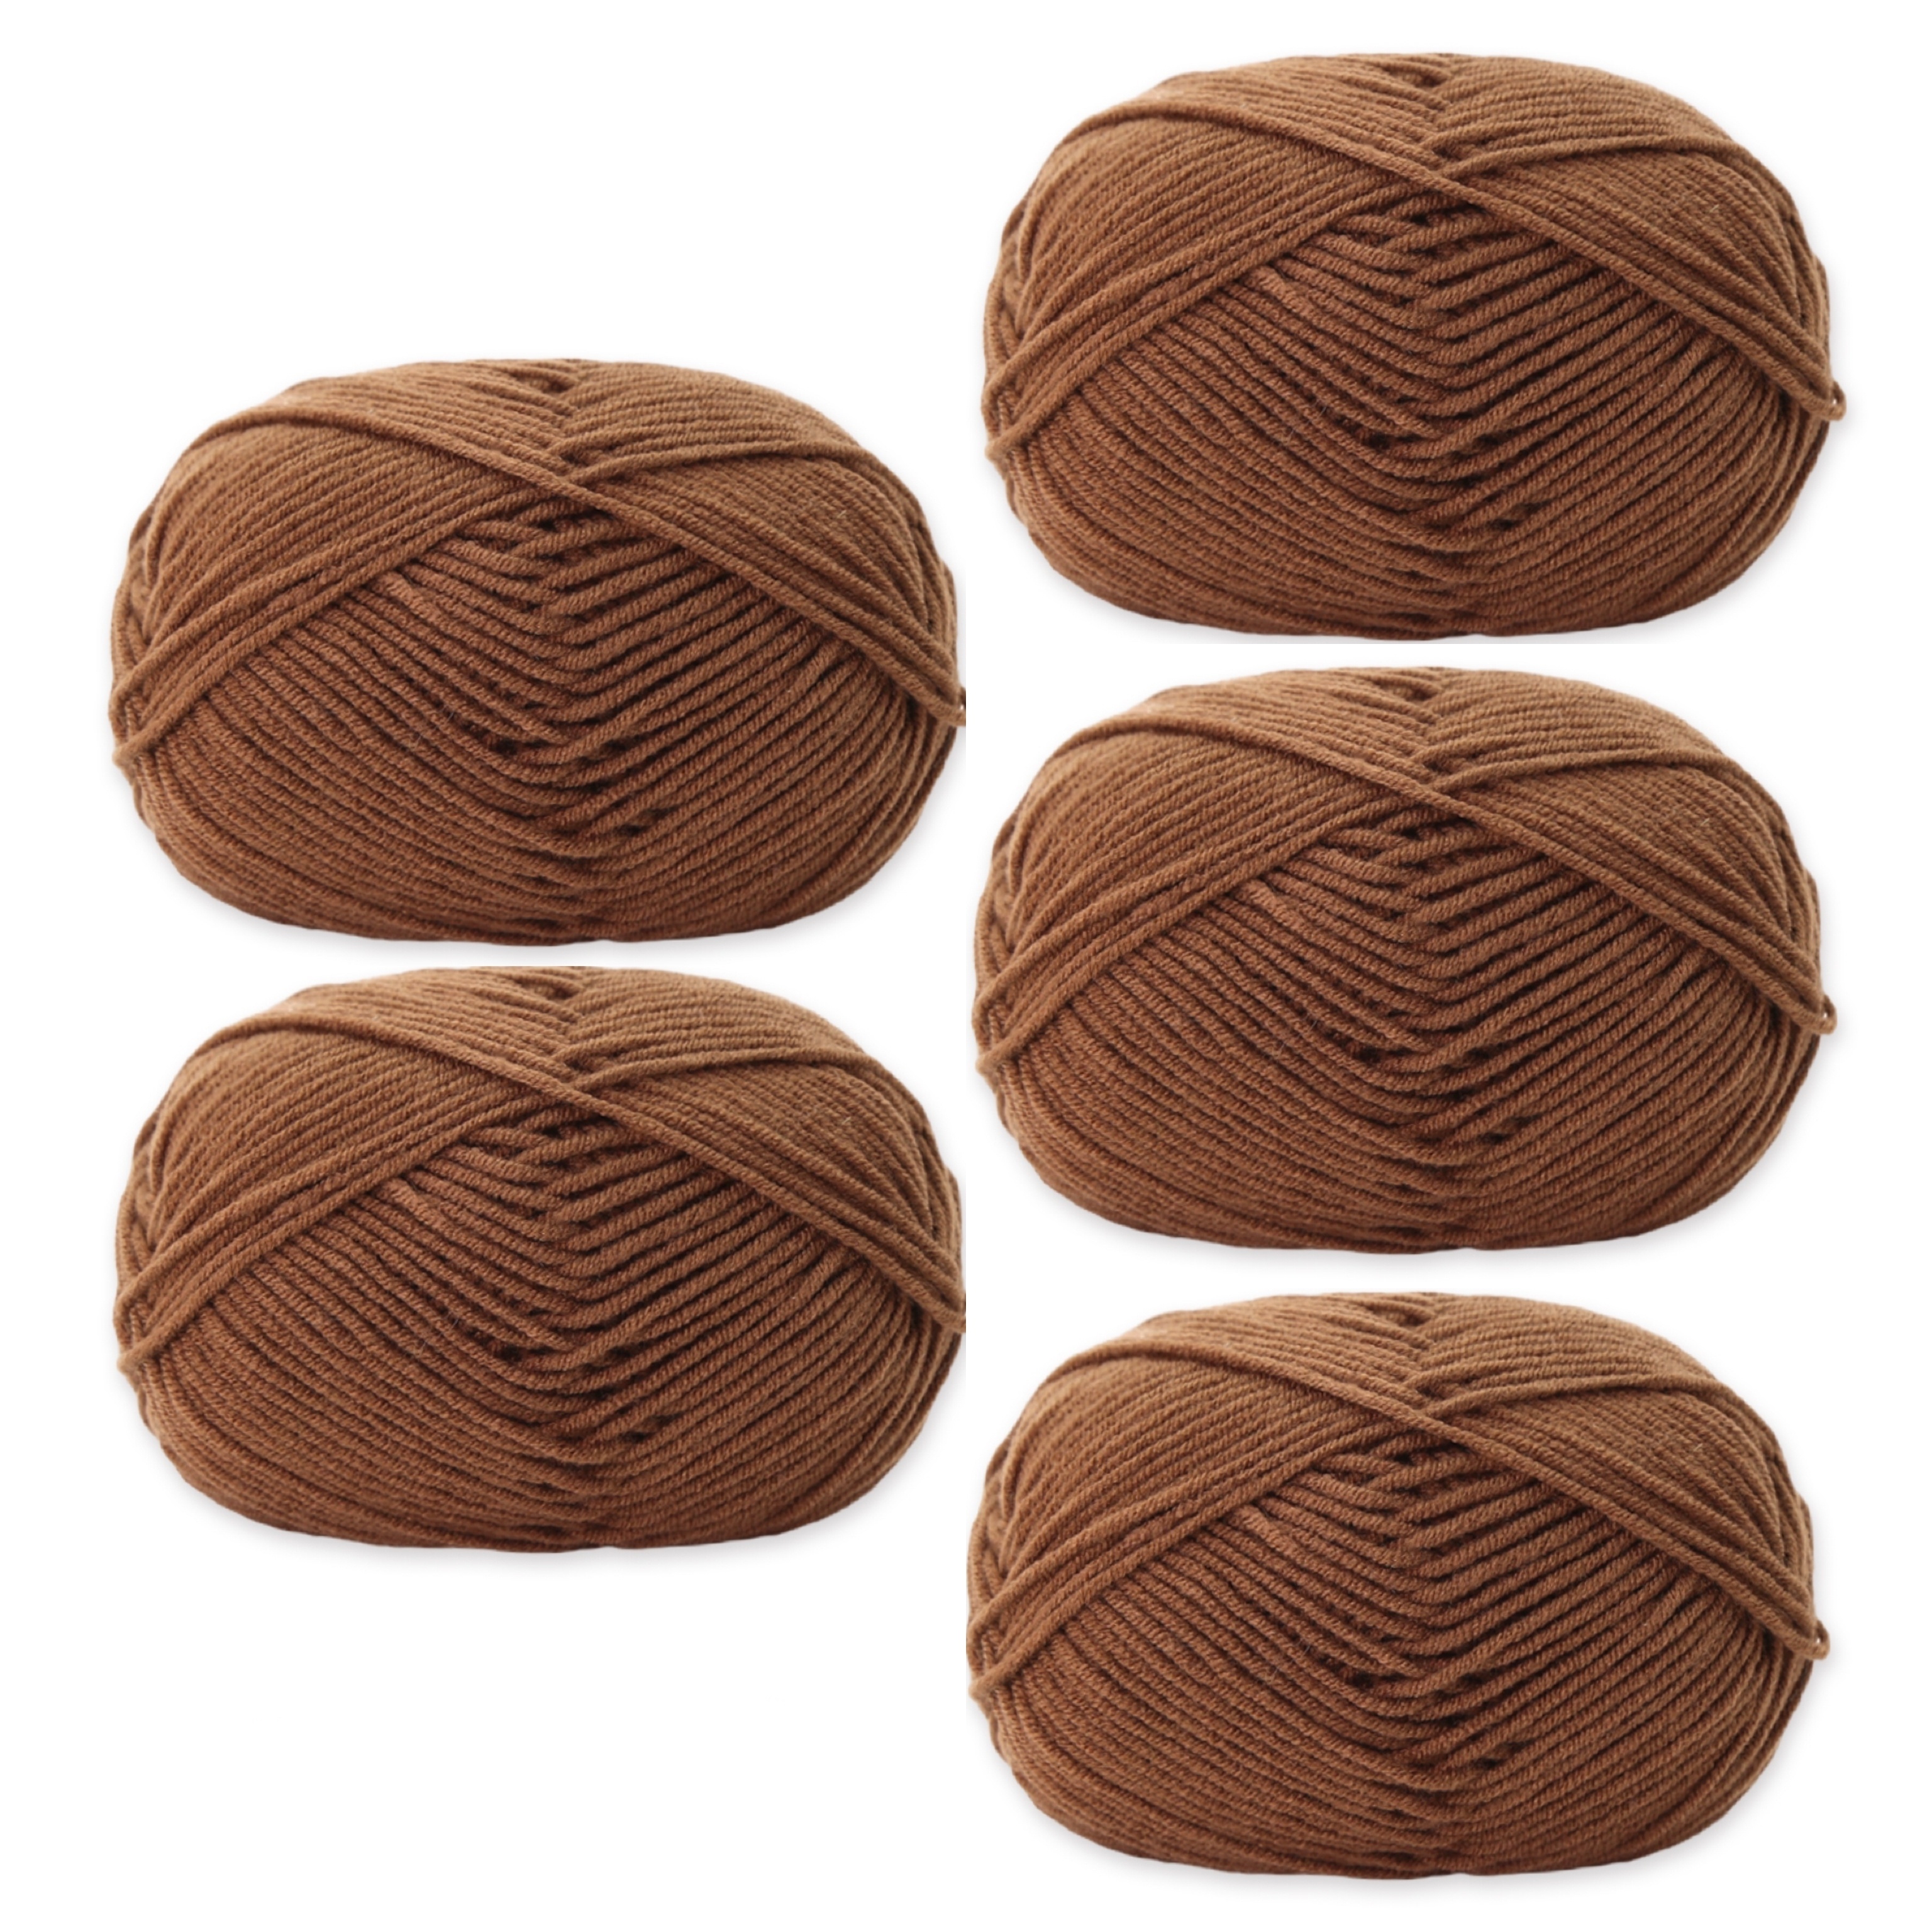 2 Skeins Soft Crochet Yarn, 100g 280 Yards Assorted Colors 4ply Acrylic  Yarn,Yarn for Crochet & Hand Knitting by spincosy (Orange)